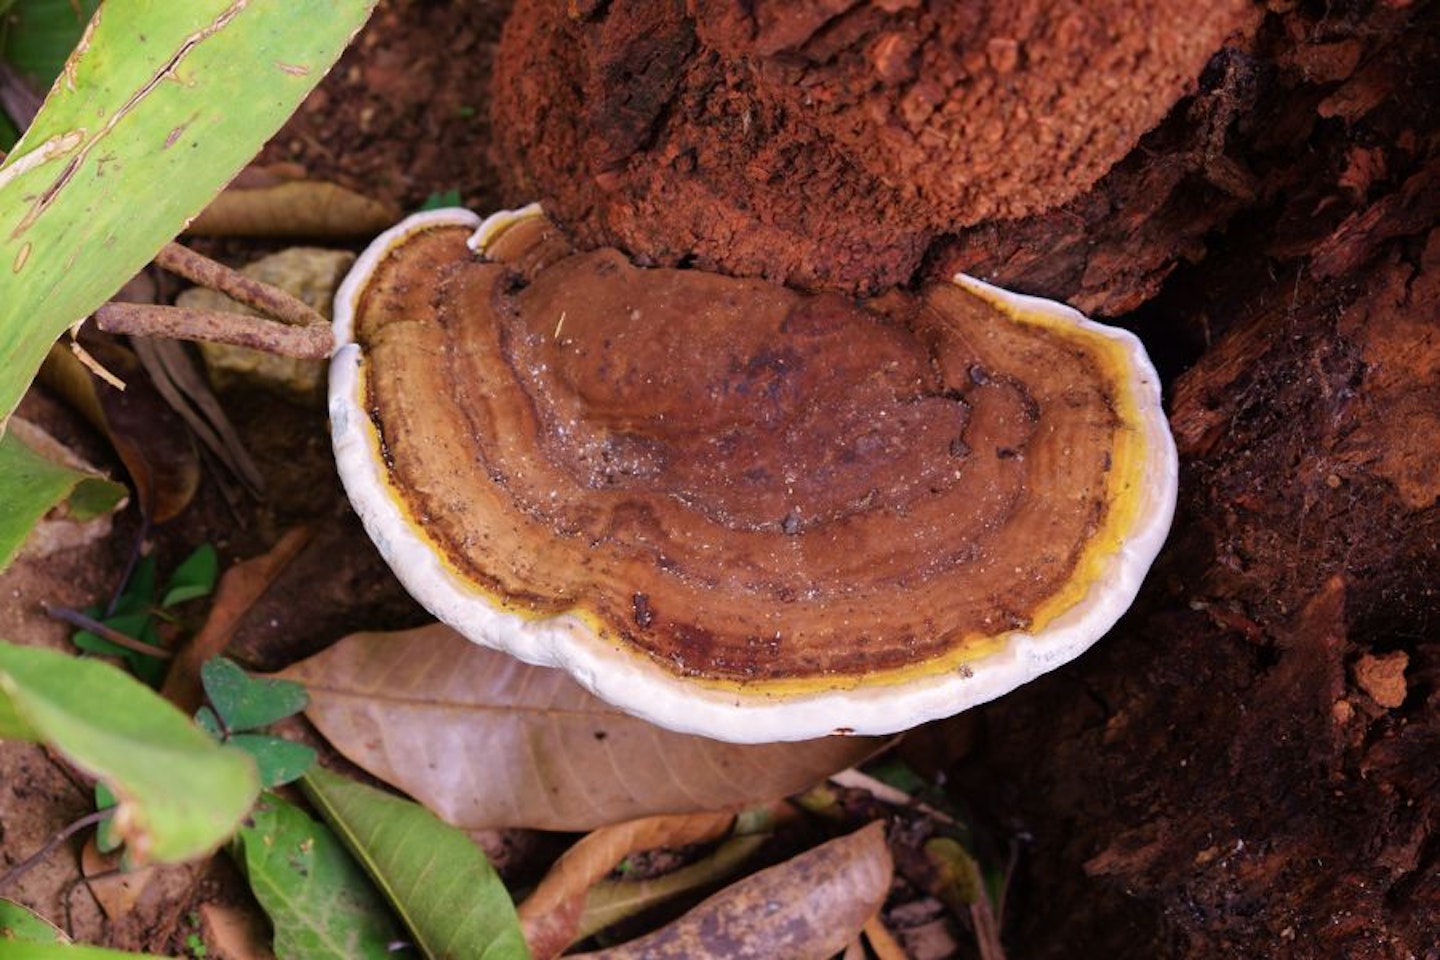 Reishi Mushroom (Lingzhi) growing at the bottom of tree stem